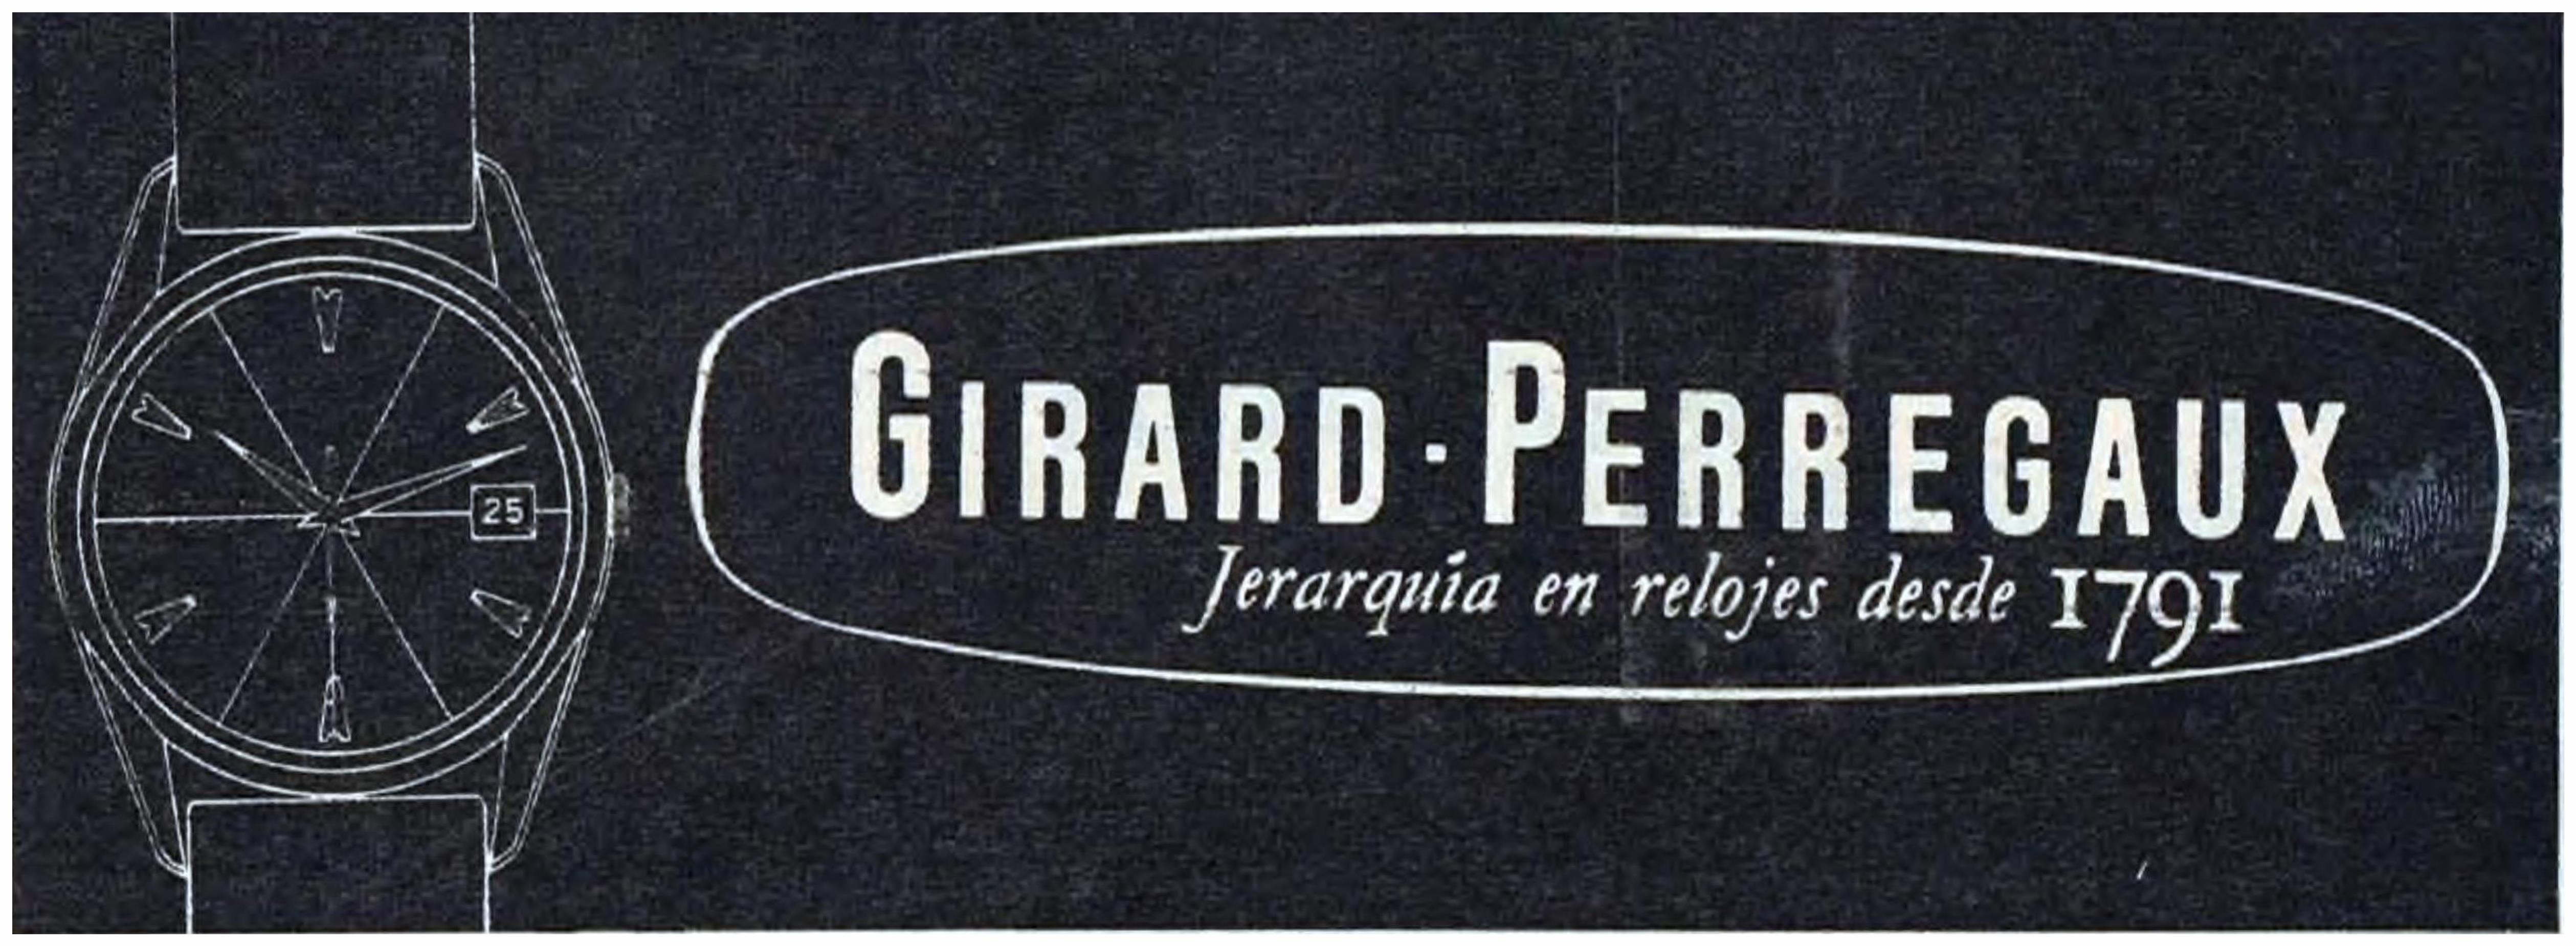 Girard-Perregaux 1963 0.jpg